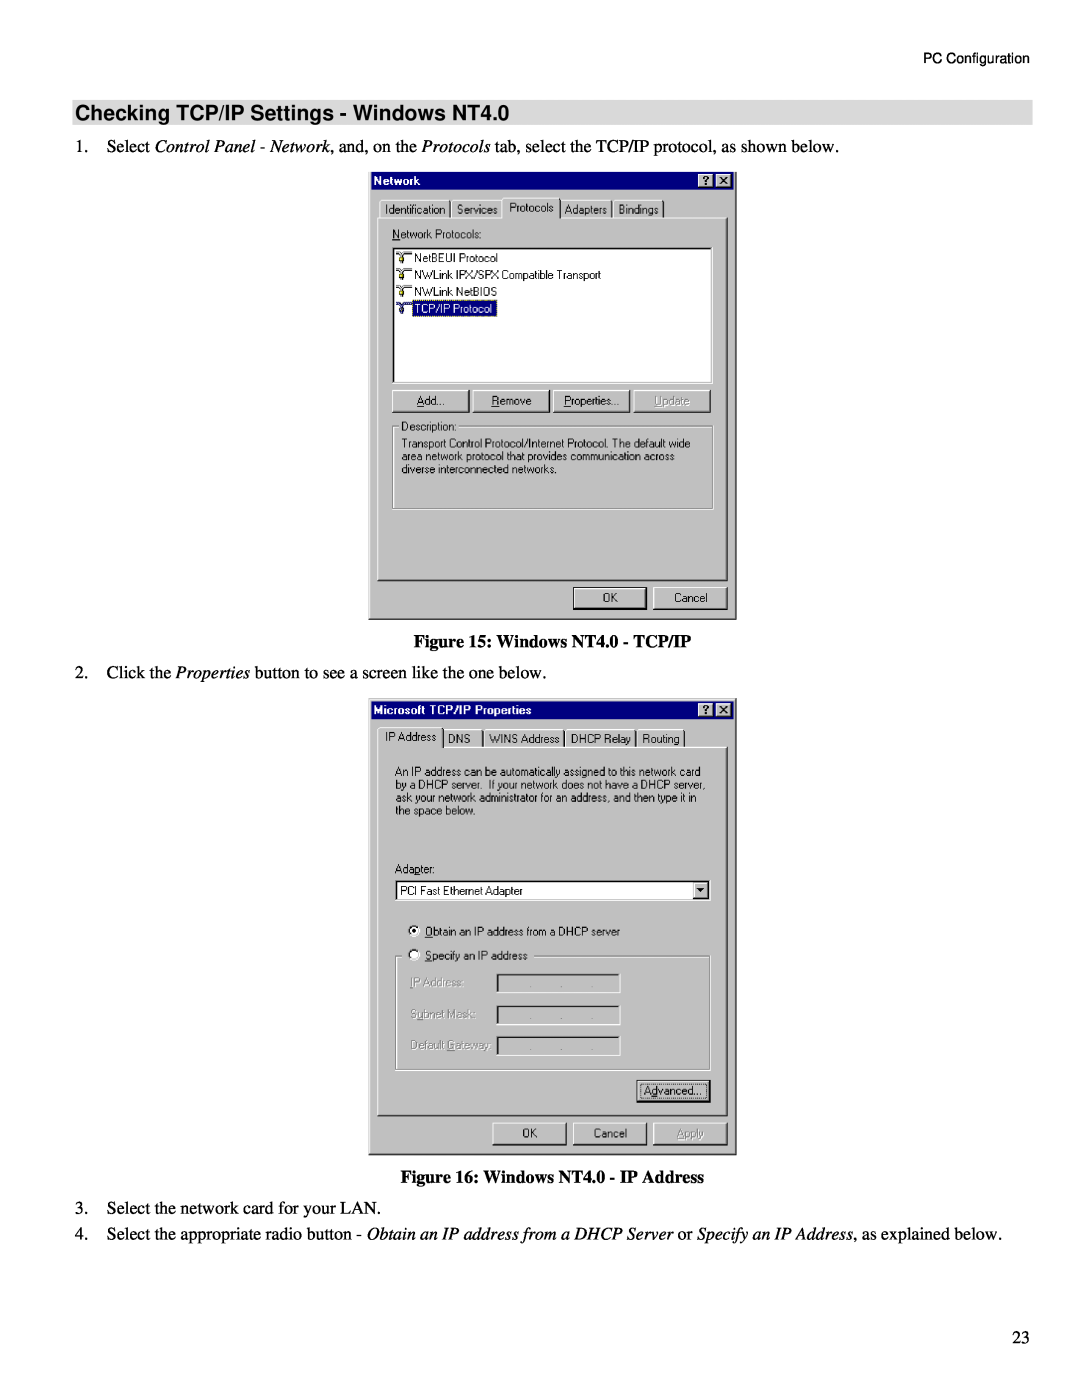 TRENDnet TW100-BRV324 manual Checking TCP/IP Settings - Windows NT4.0, Windows NT4.0 - TCP/IP, Windows NT4.0 - IP Address 